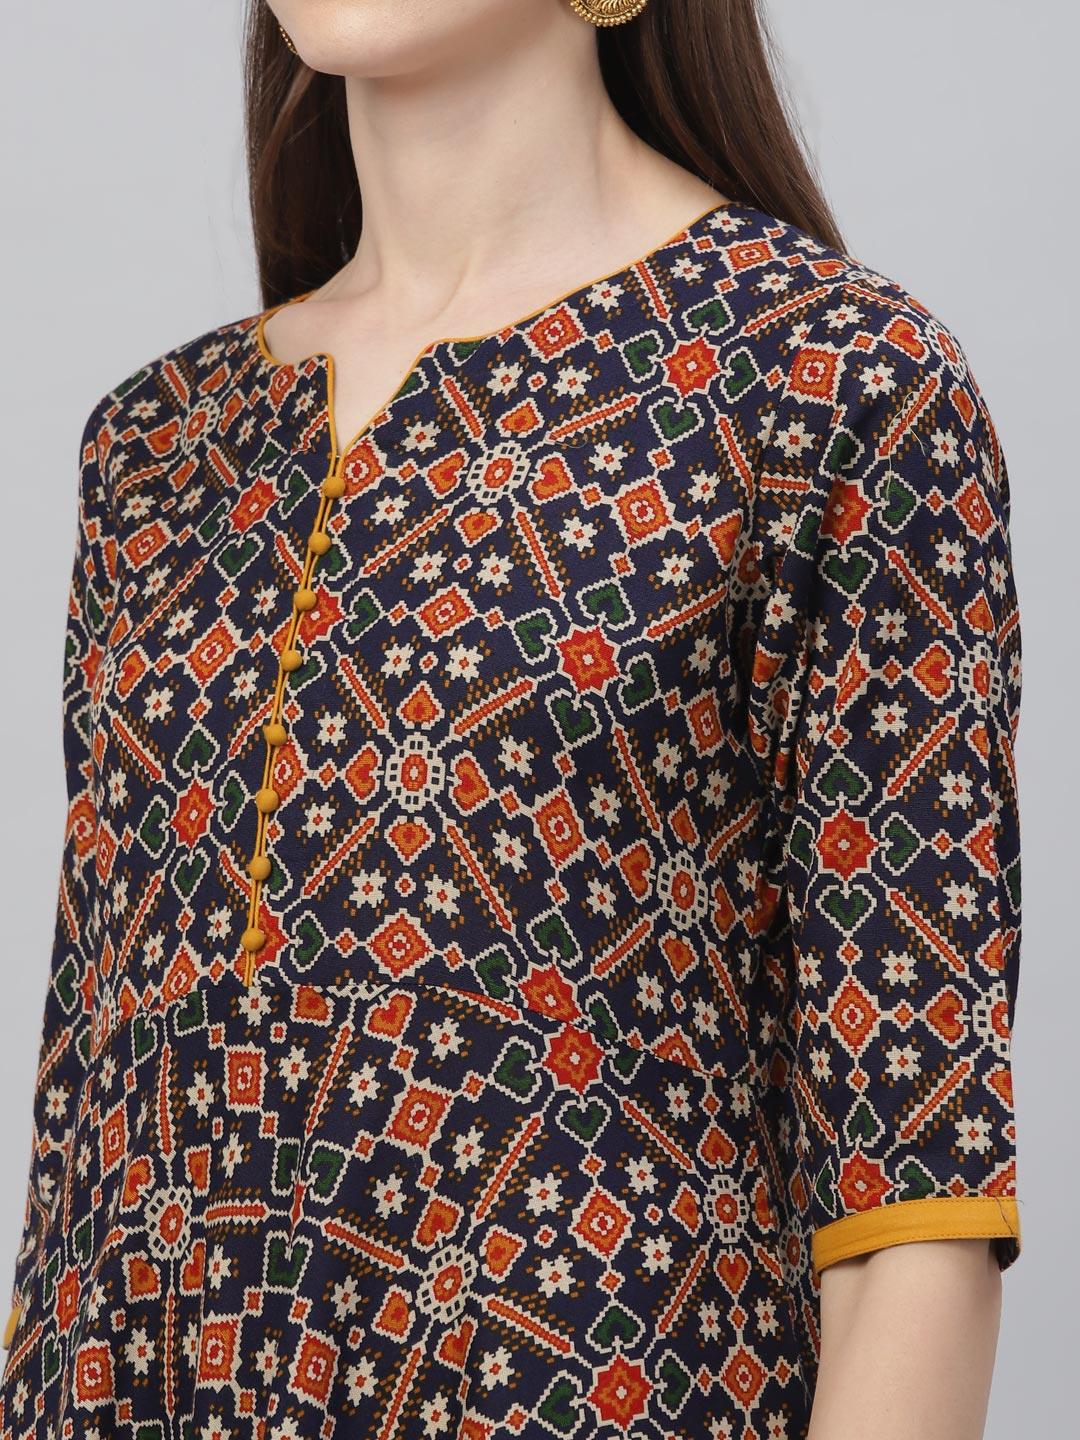 Multicoloured Printed Cotton Dress - Libas